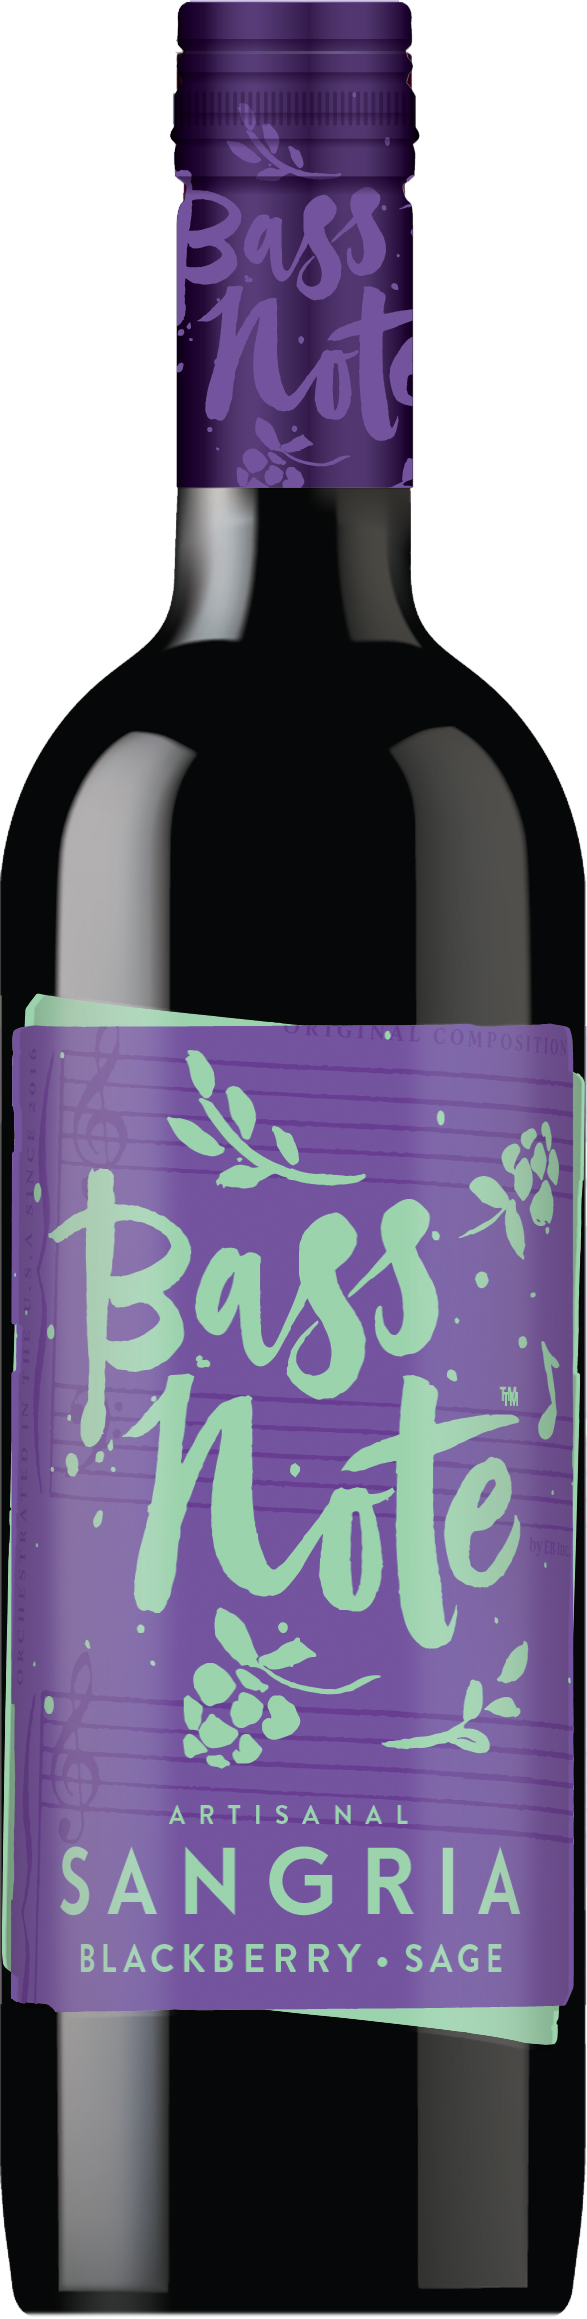 Bass Note Sangria - Blackberry Sage 750ml